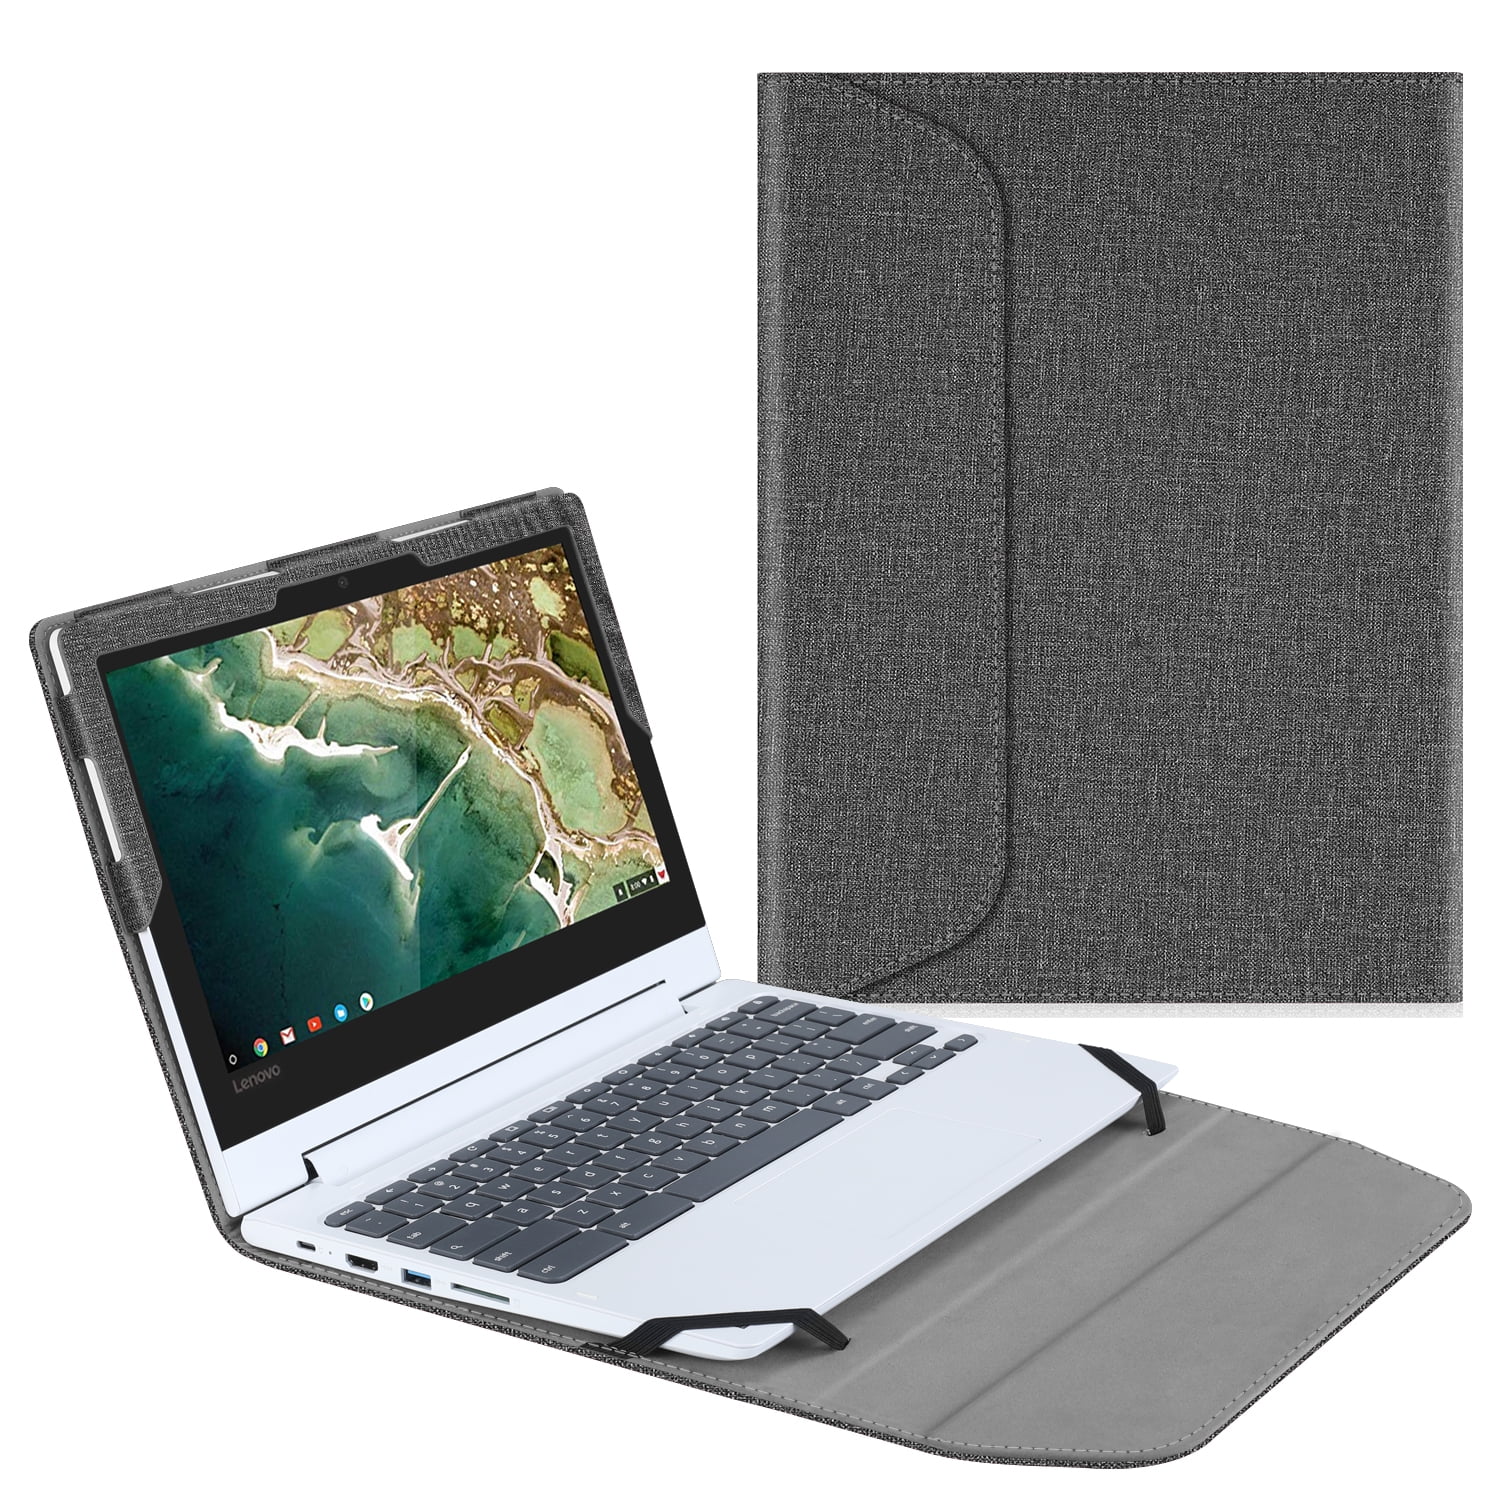 11.6-12.3 inch Laptop Bag Acer ASUS Dell HP Samsung Chromebook 11.6 11.6 Inch Laptop Case Sleeve for Lenovo Chromebook C330/Flex 11/Thinkpad Yoga 11.6 Google Pixelbook Samsung Chromebook Pro/Plus 